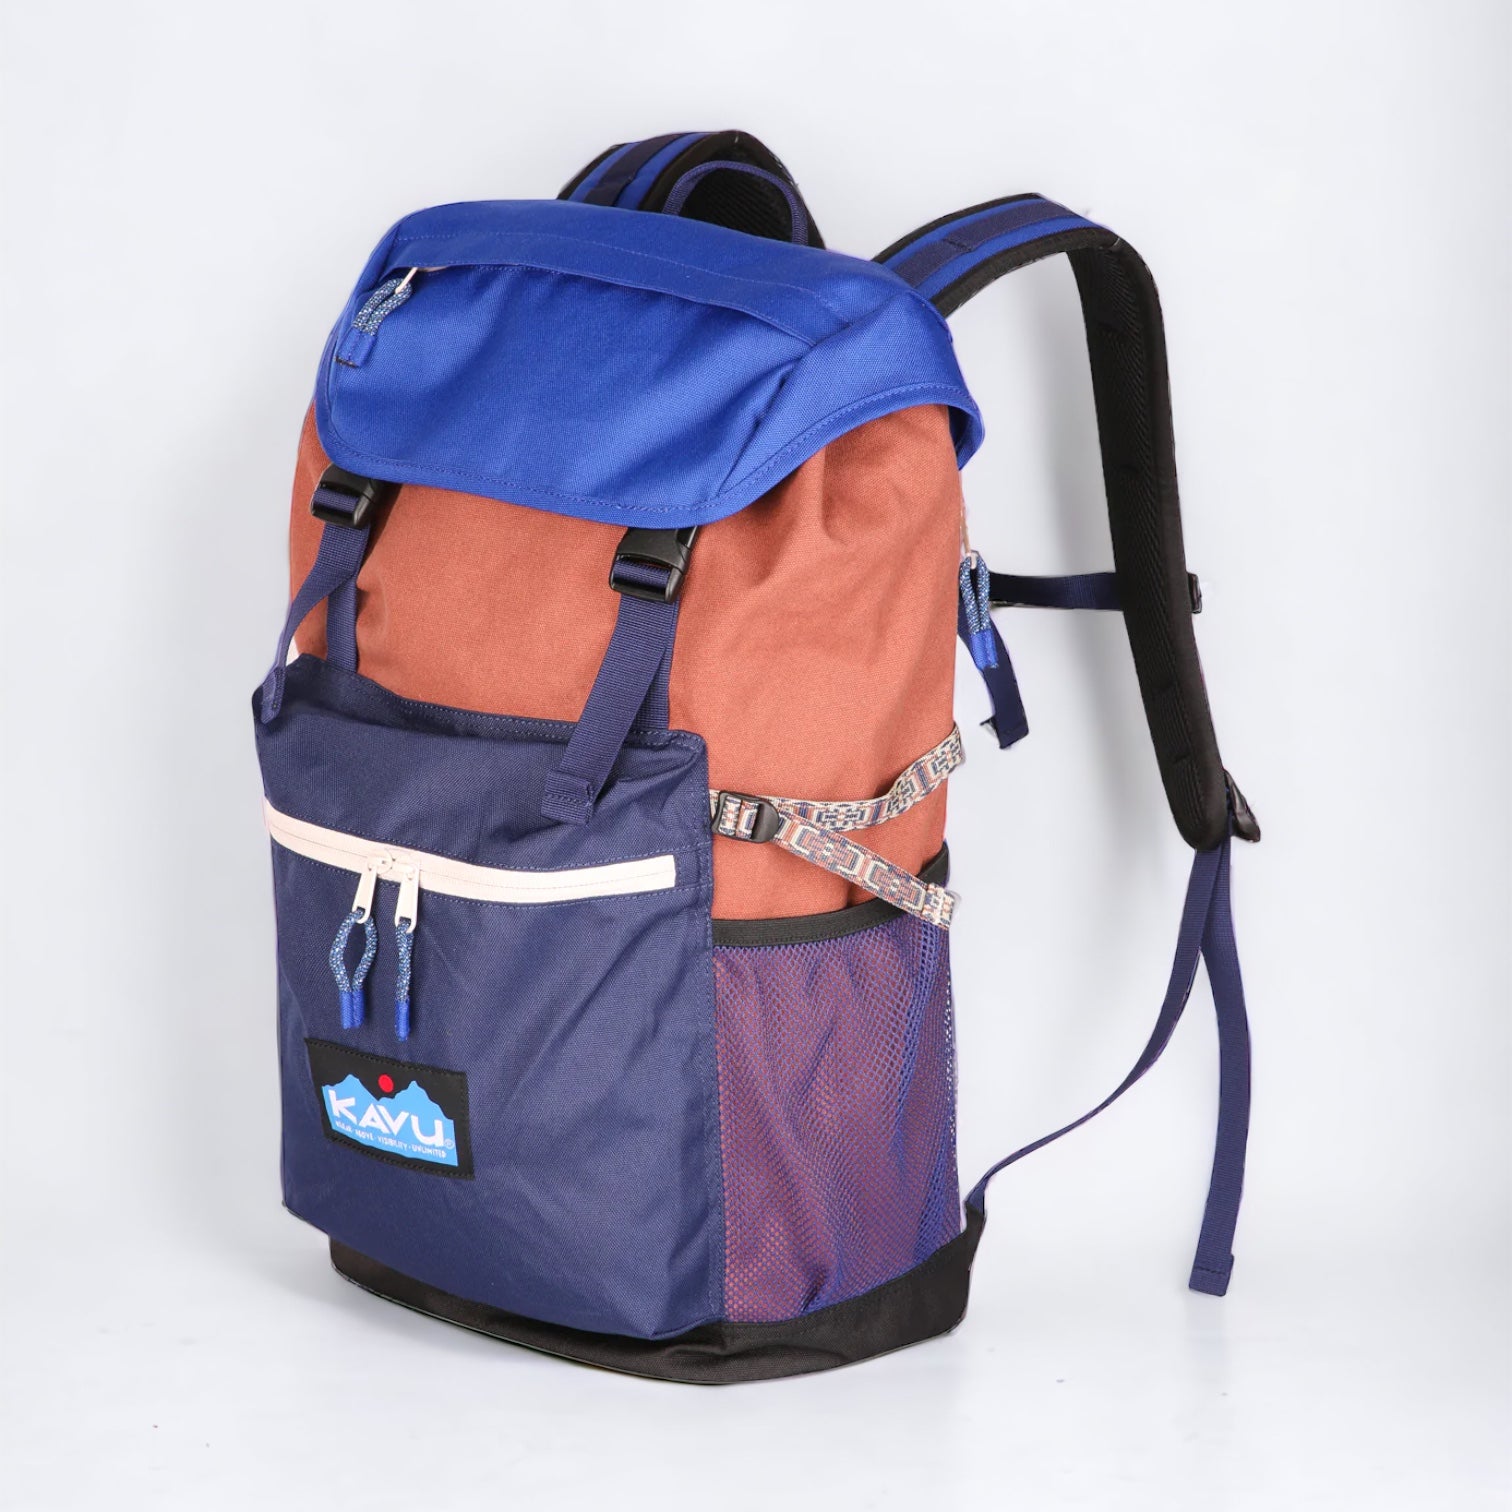 Kavu Timaru Backpack - Mountaineer